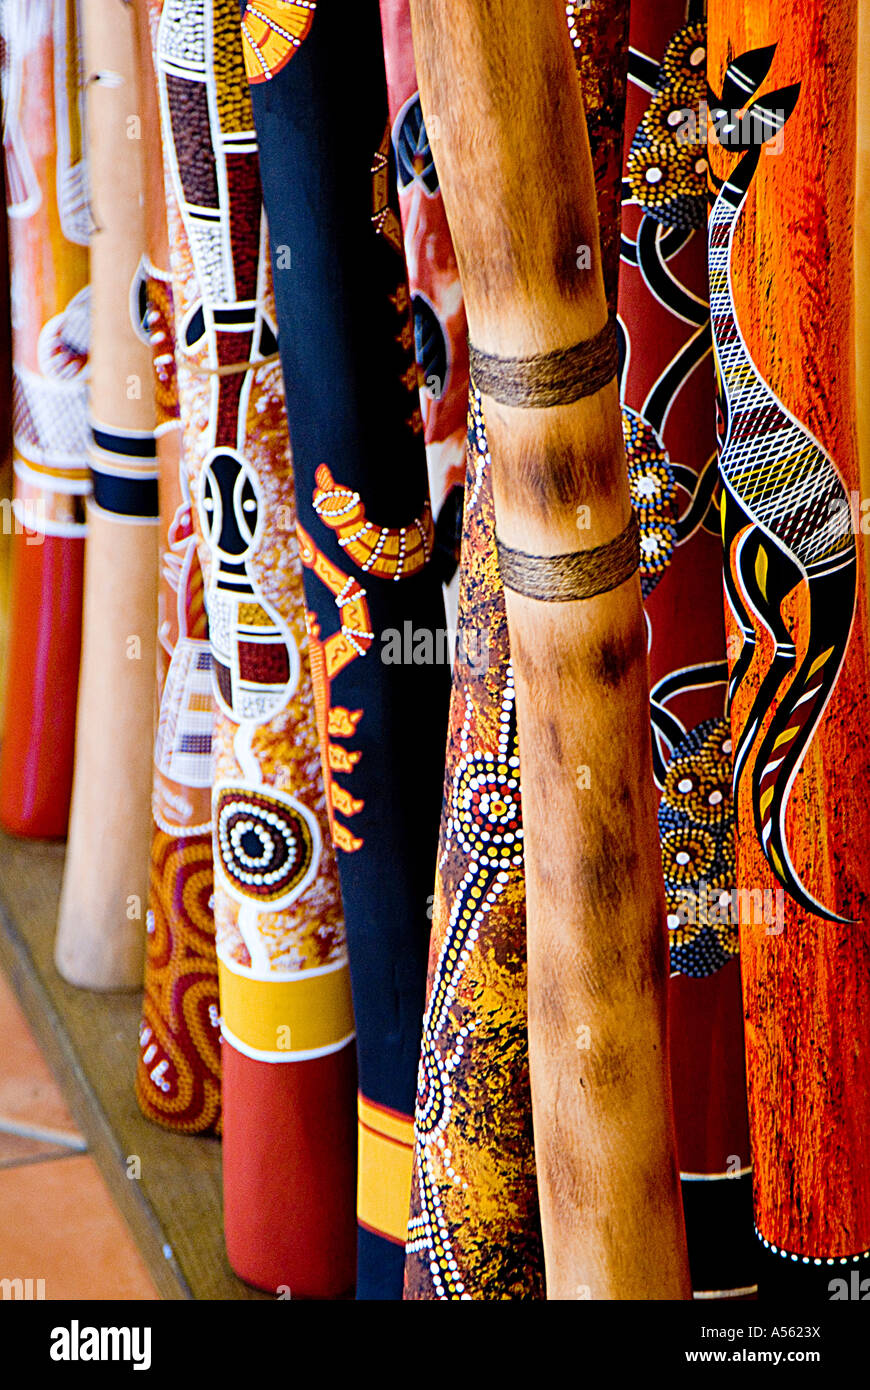 Australian didgeridoo aboriginal wind instruments Stock Photo - Alamy